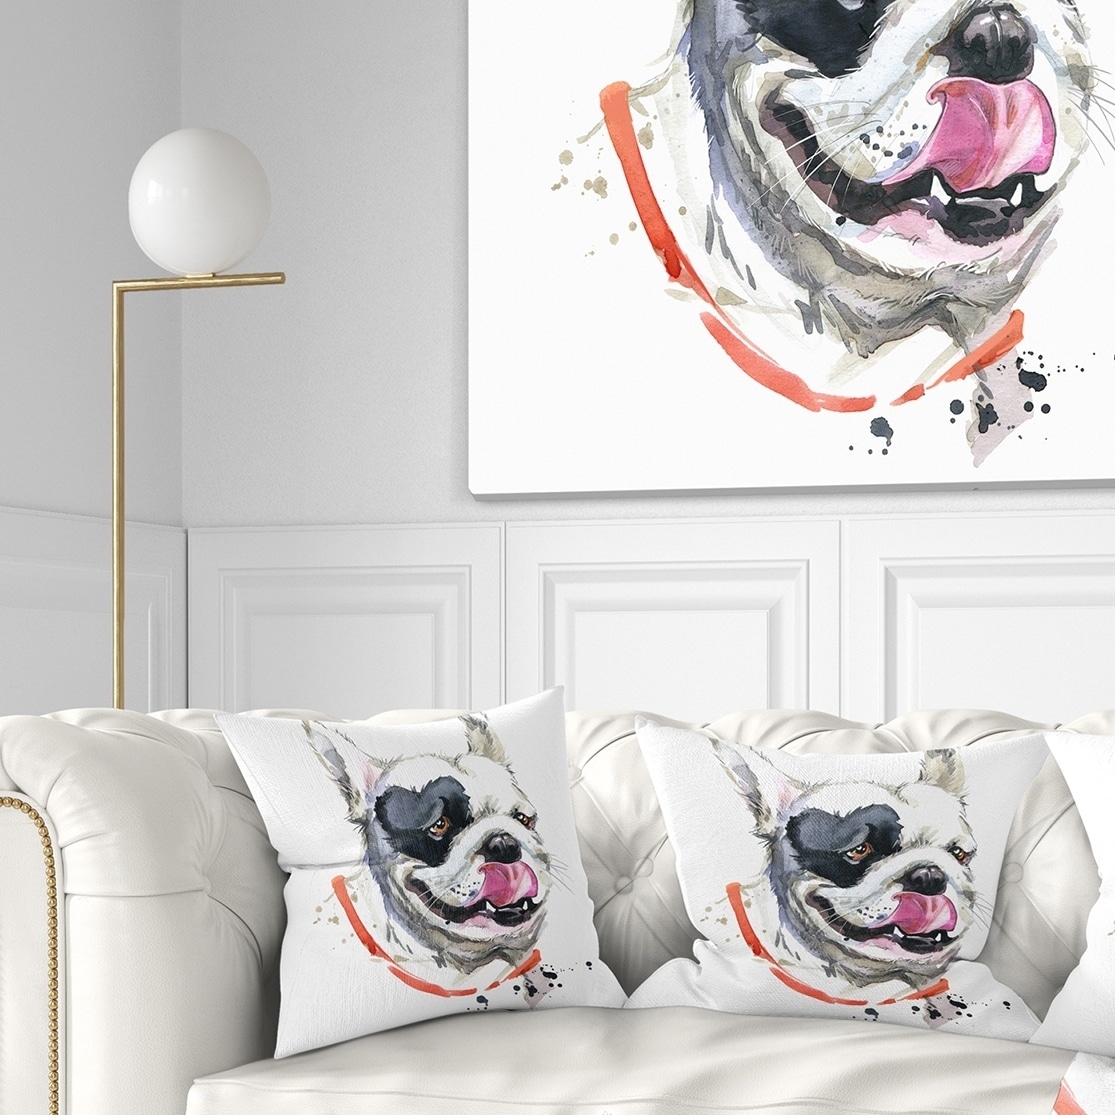 https://ak1.ostkcdn.com/images/products/20950862/Designart-Kiss-French-Bulldog-Illustration-Animal-Throw-Pillow-1cdced2c-f056-40c1-923c-c523e7766ae5.jpg